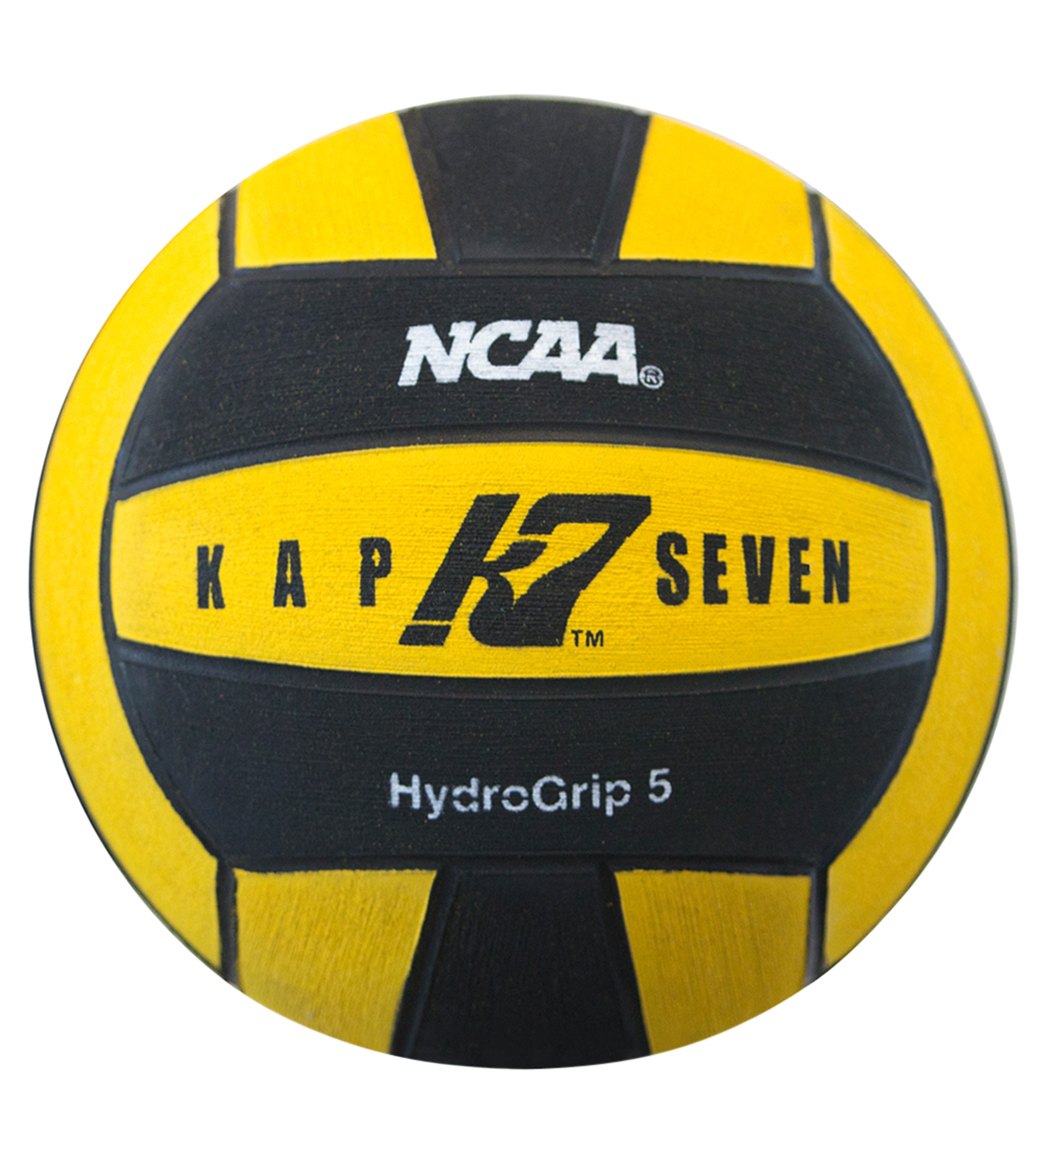 Kap7 Men's Size 5 Hydrogrip Water Polo Ball Ncaa Cwpa - Yellow/Black - Swimoutlet.com